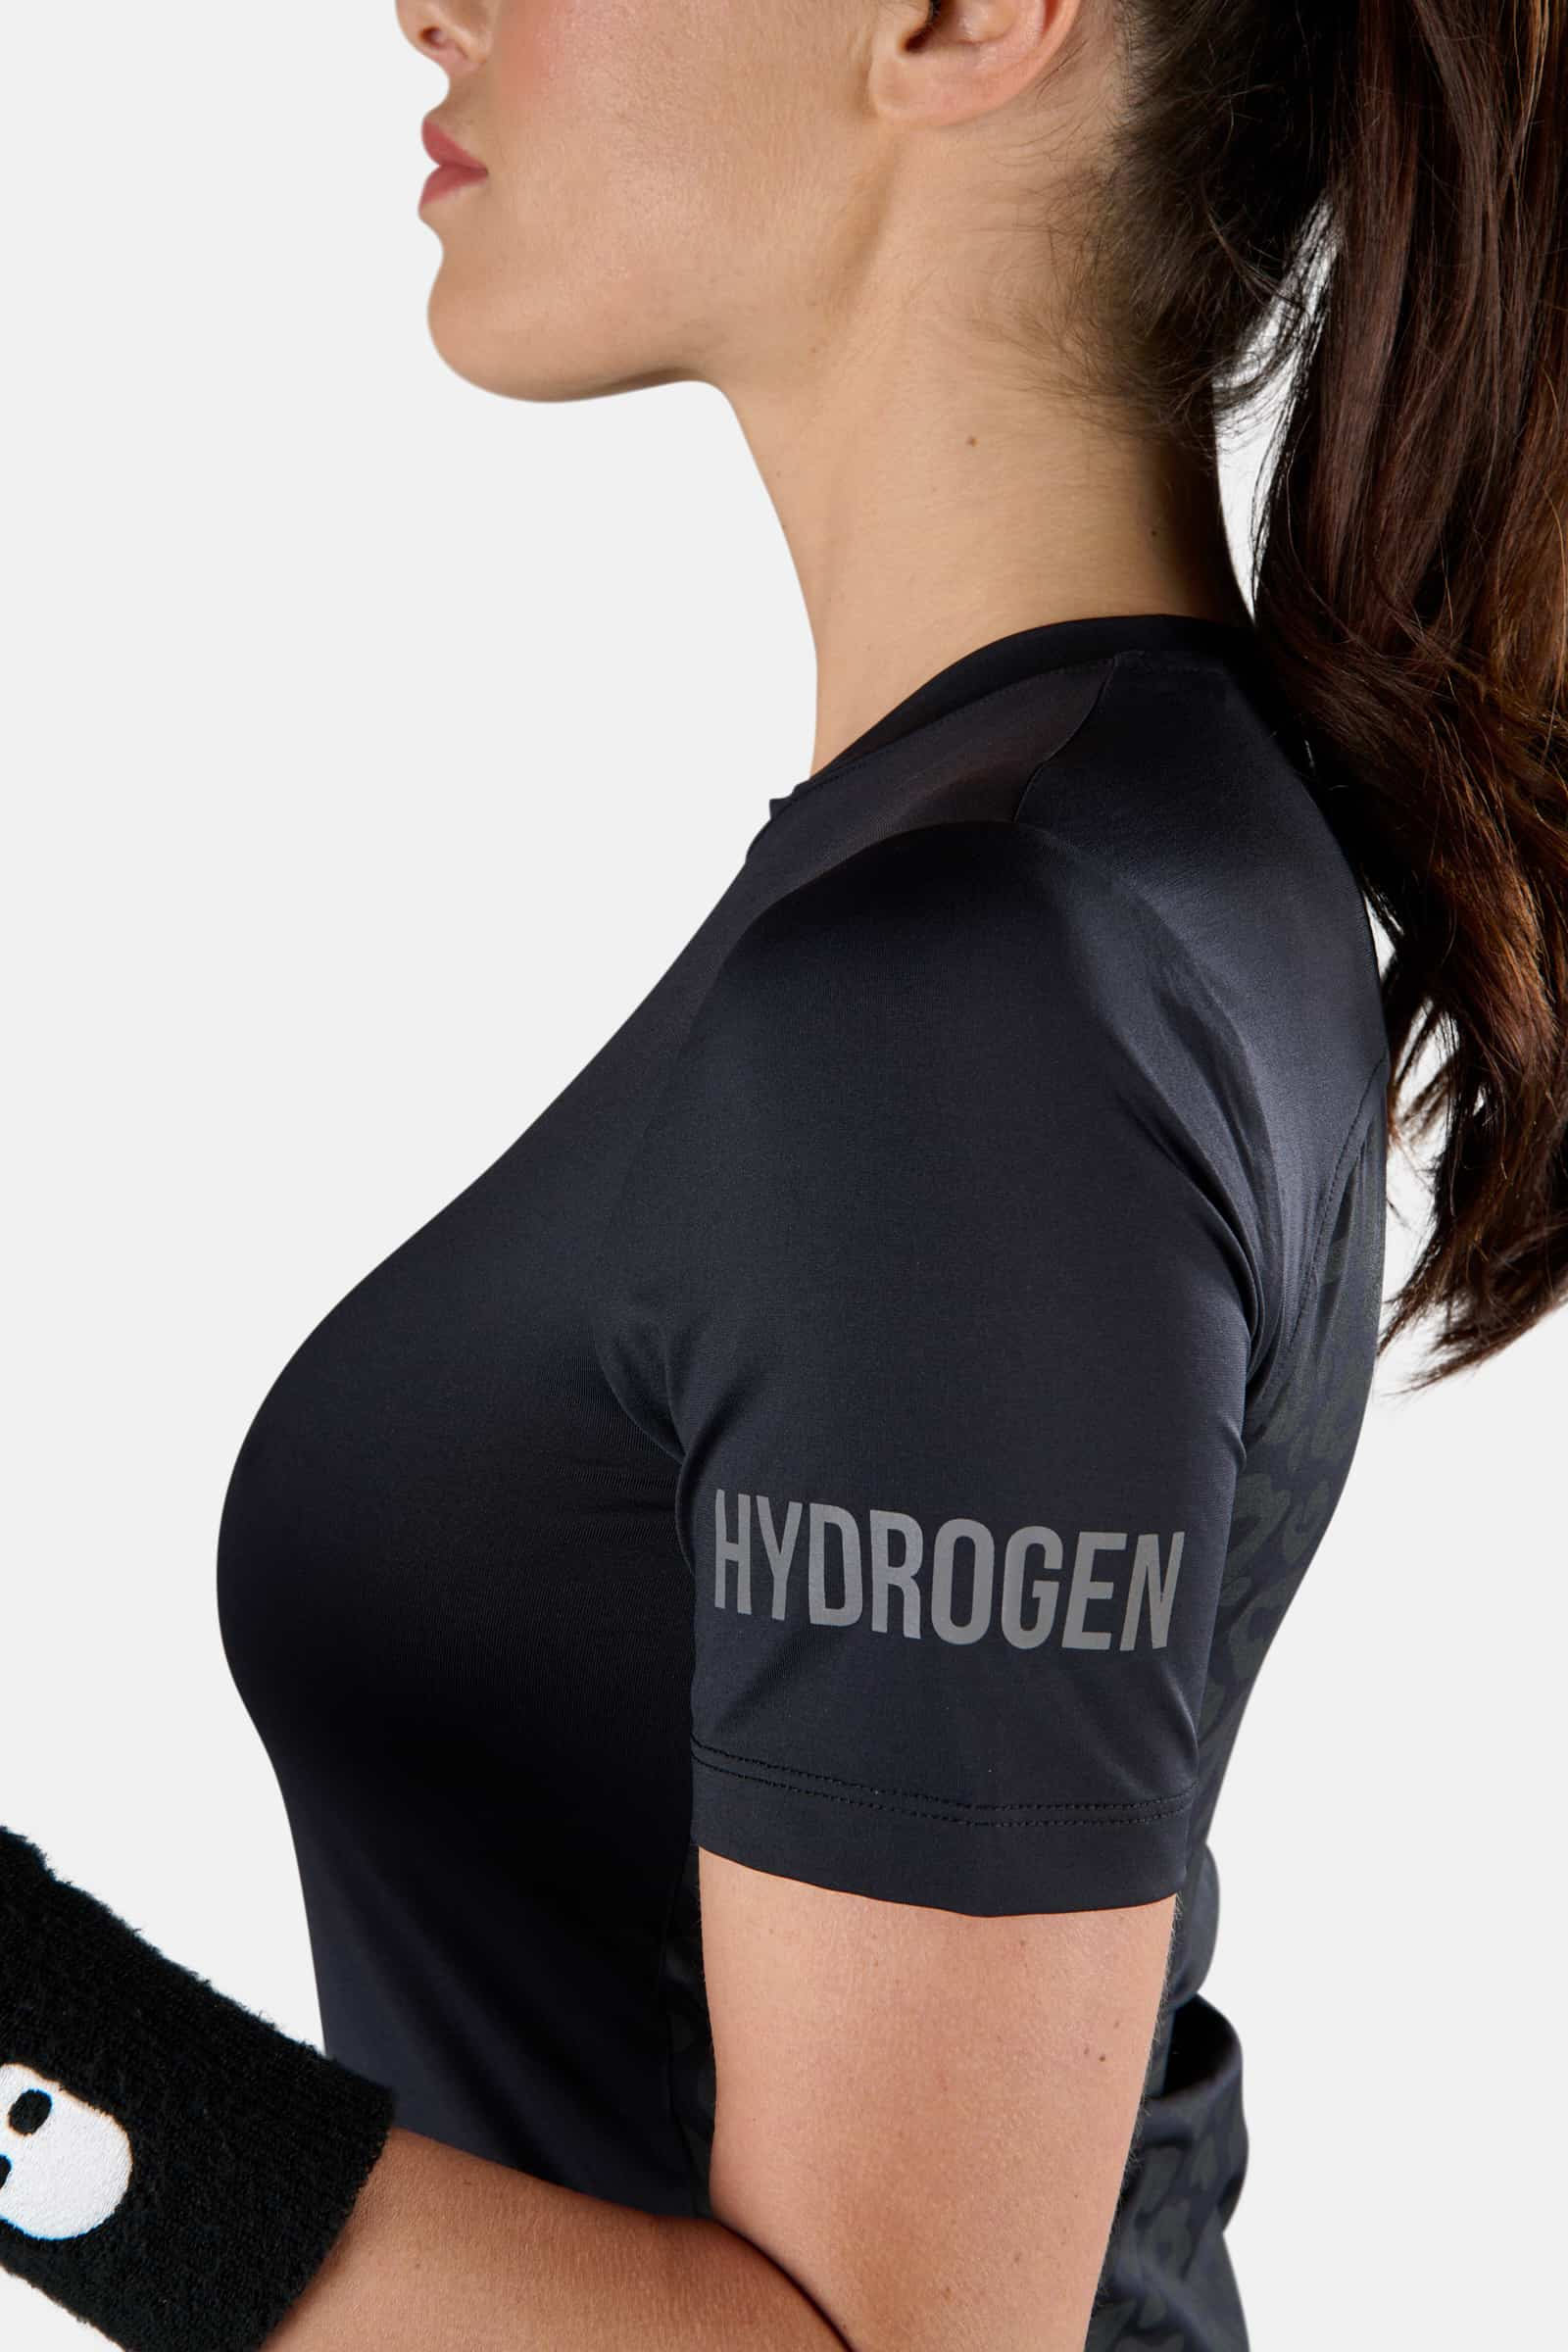 T-SHIRT TECNICA PANTHER - BLACK,GREY - Abbigliamento sportivo | Hydrogen